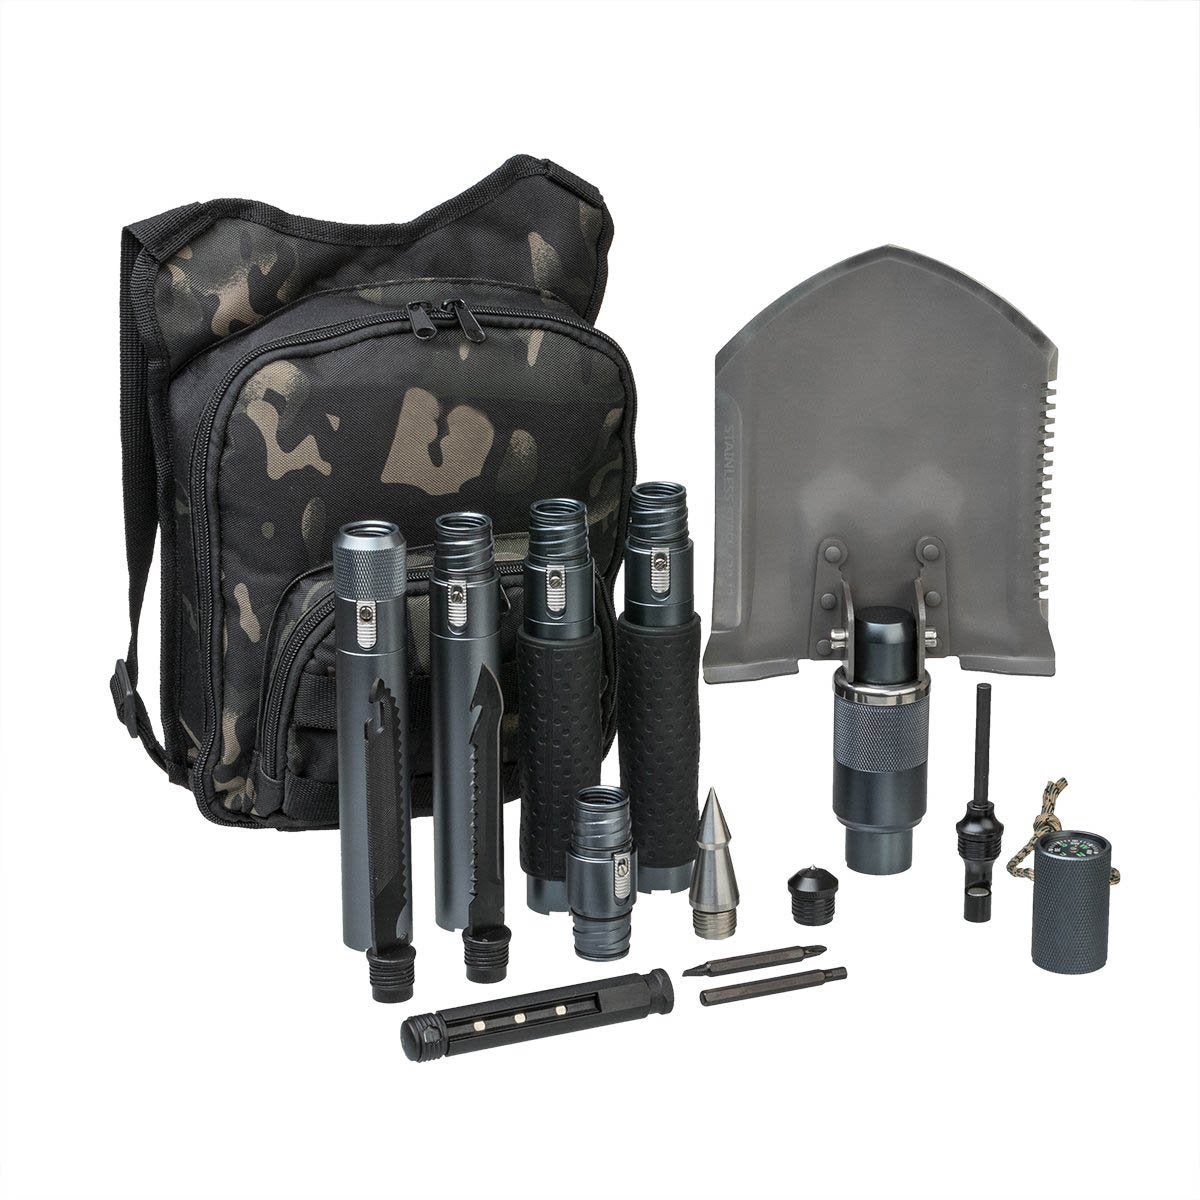 Multifunctional 38-inch Assembling Survival Shovel Tool Kit for Fishing, Hunting, Camping